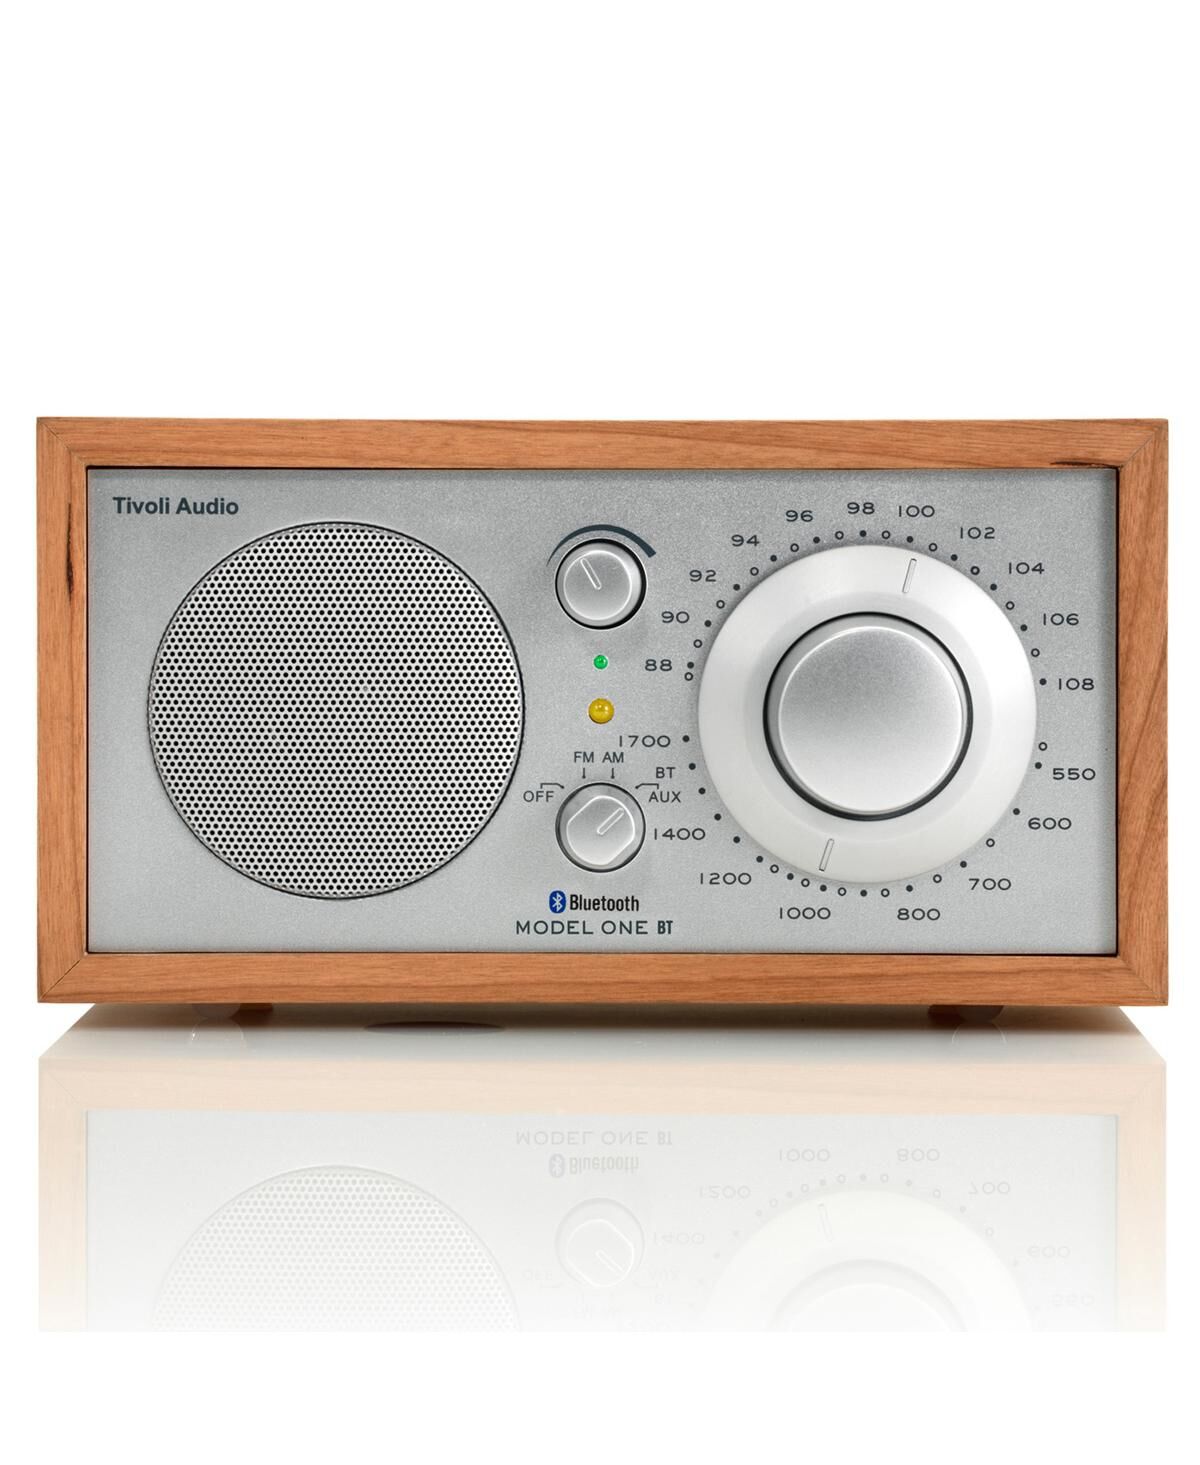 Tivoli Audio Model One Bluetooth Am/Fm Radio & Speaker - Cherry